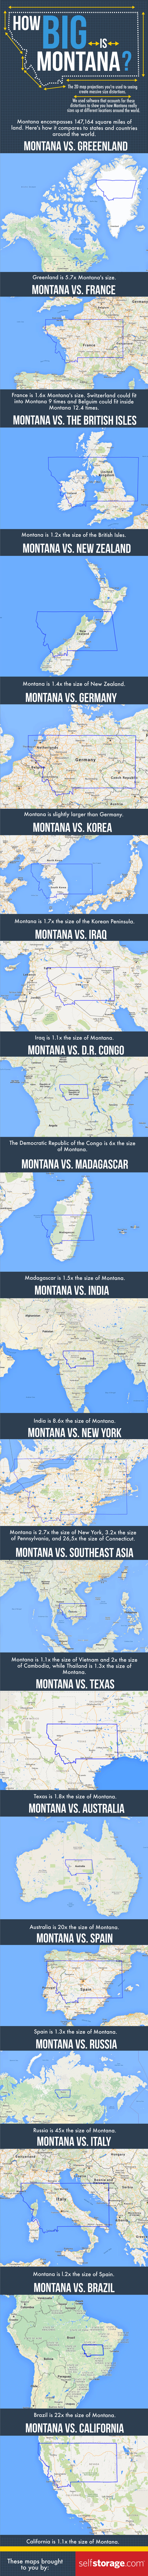 how-big-is-montana